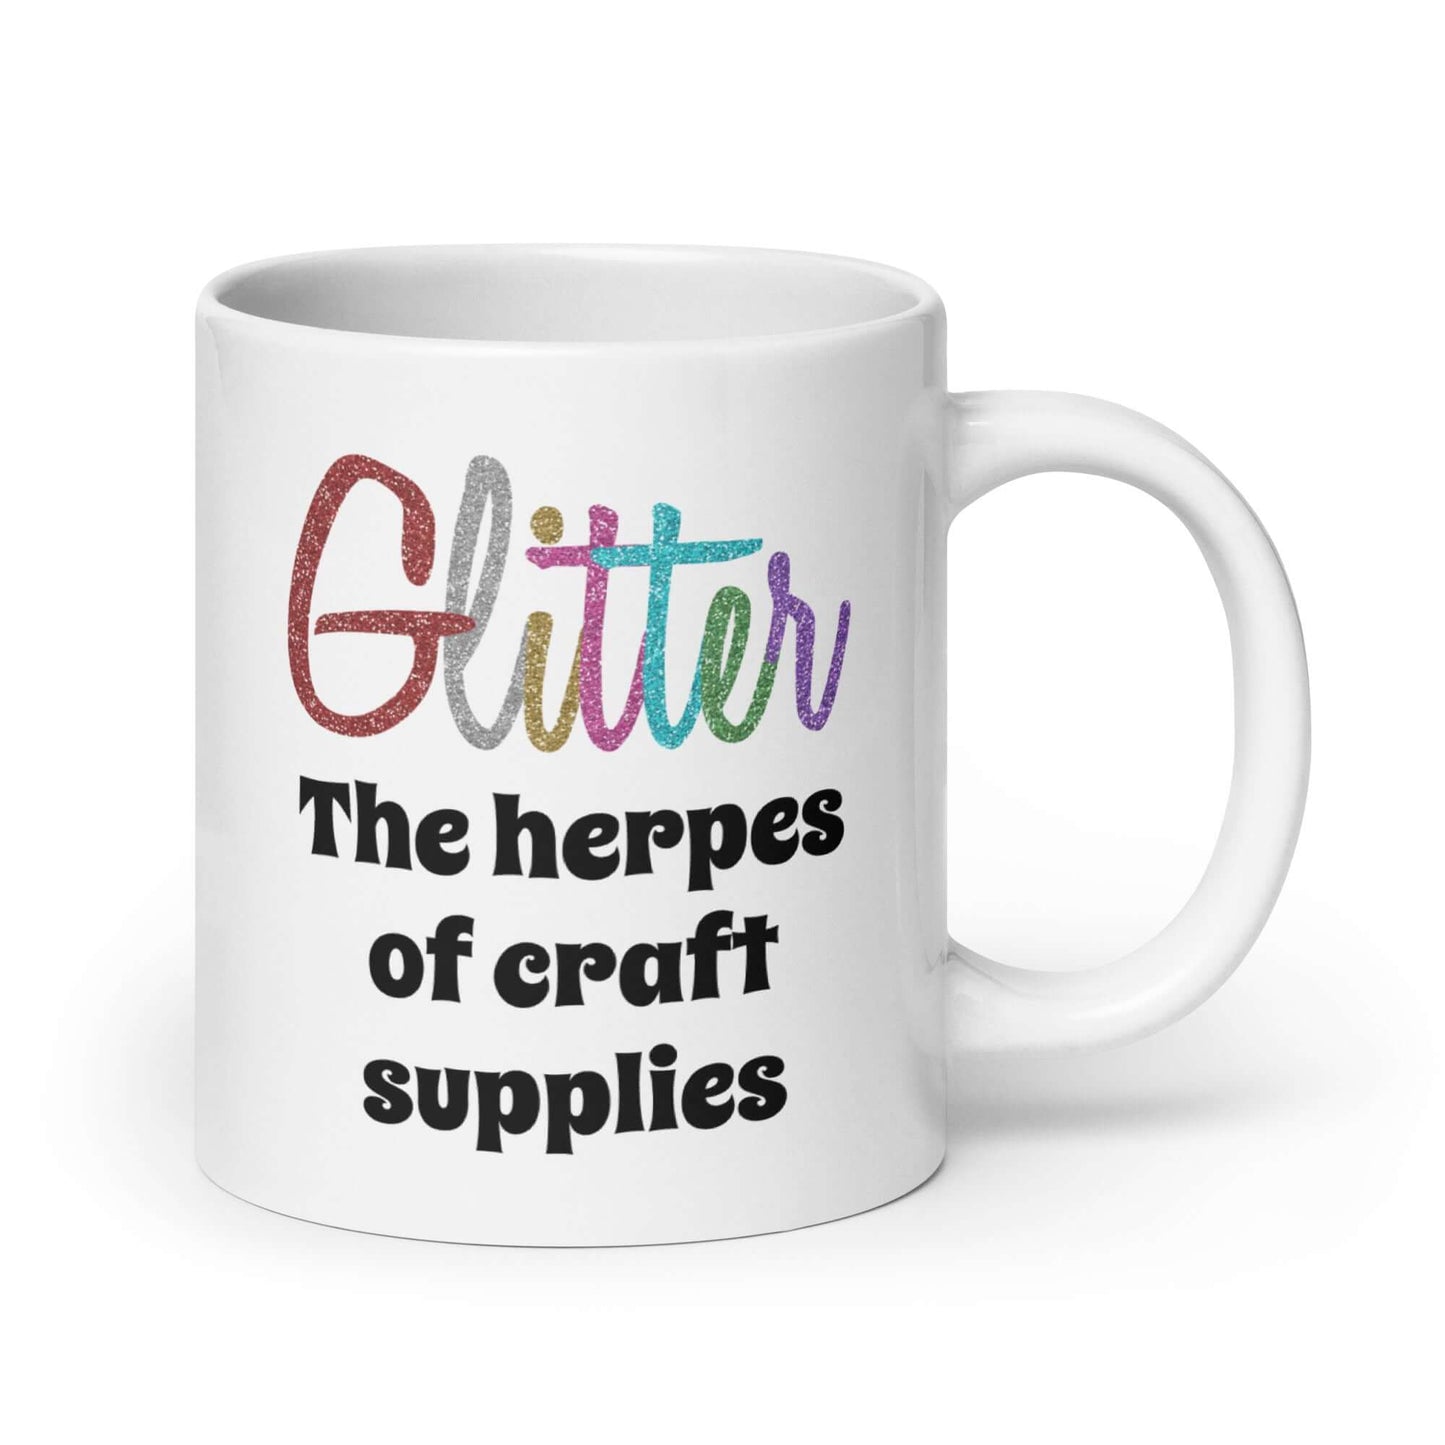 Glitter herpes craft supplies humor mug. Funny sarcastic glitter print coffee mug